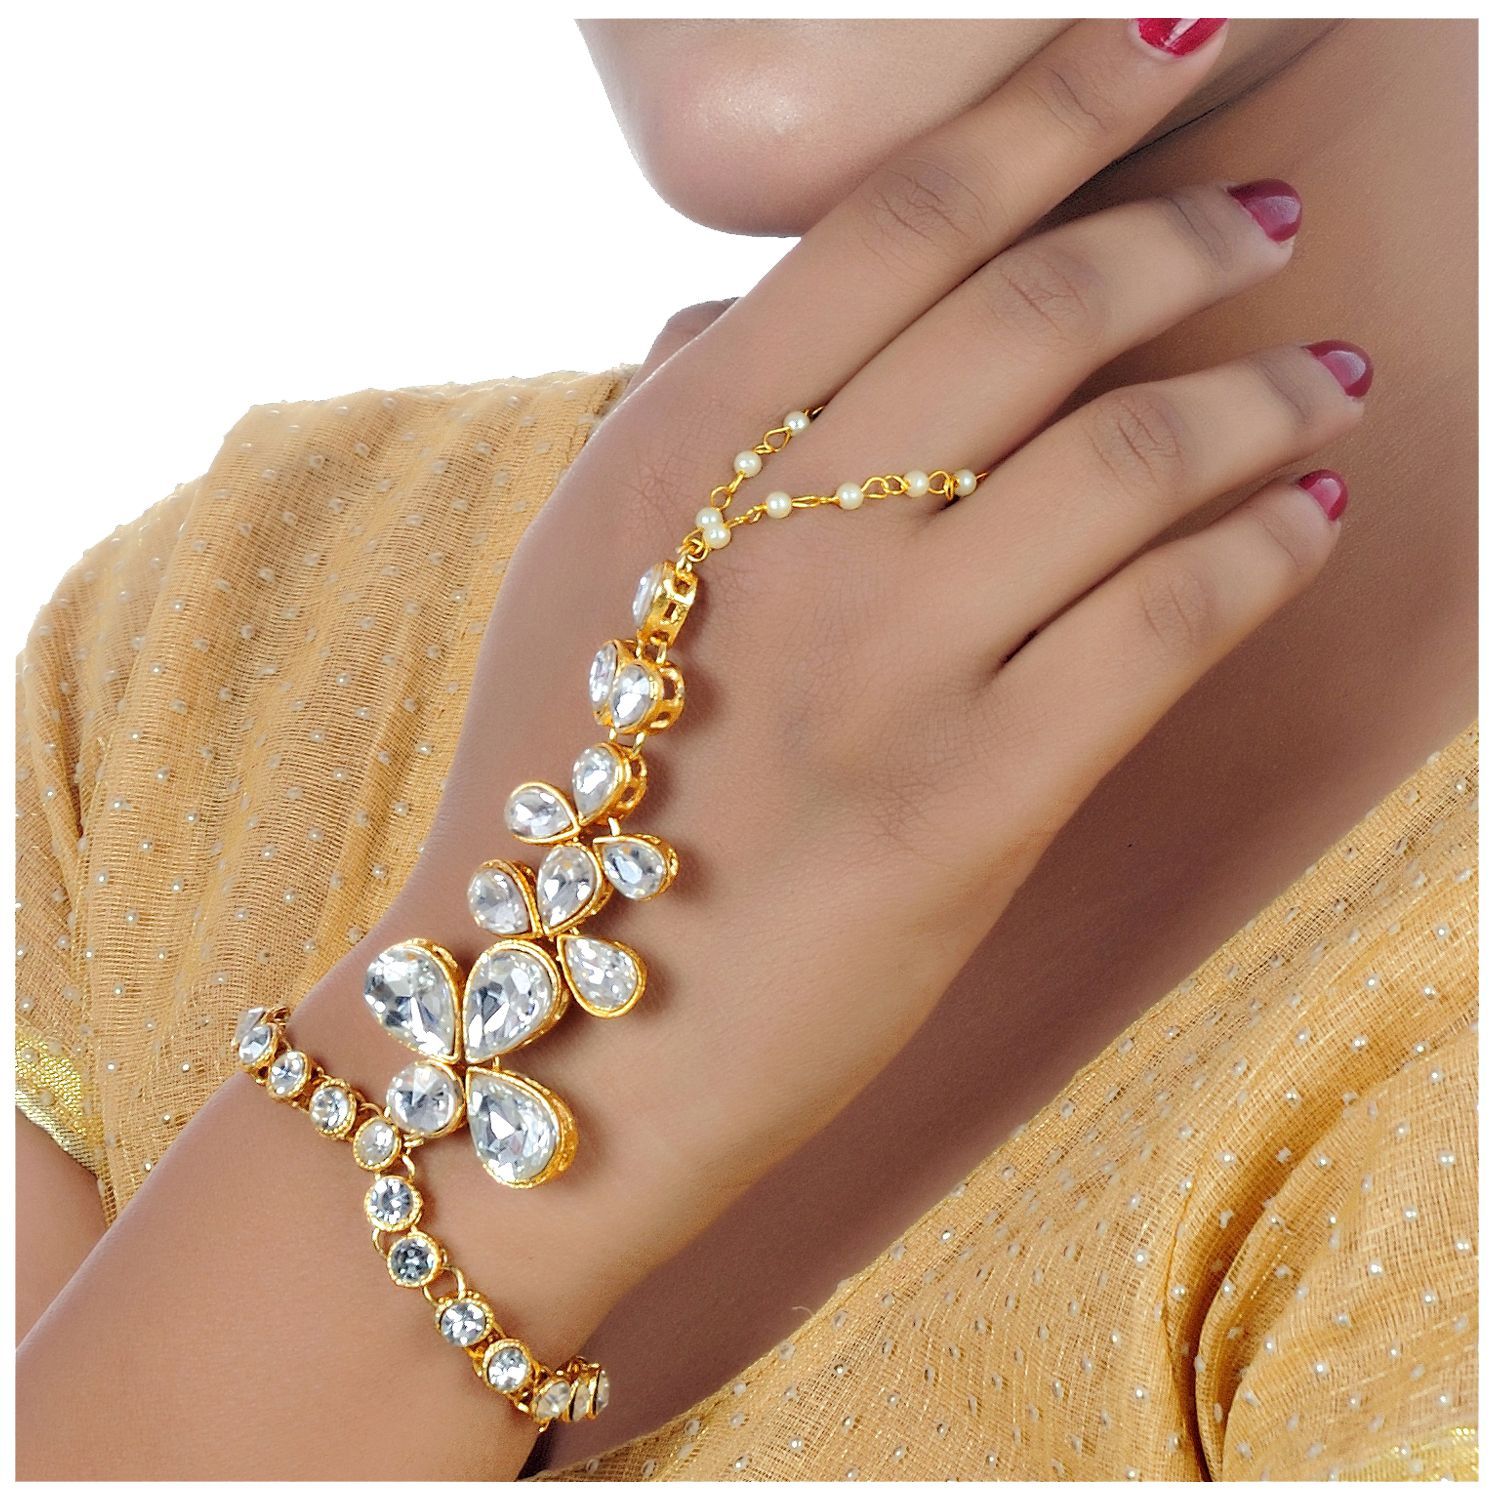 Simple Hand Chain Bracelets in 14K Gold Filled and Sterling Silver FINGER  BRACELET - Etsy